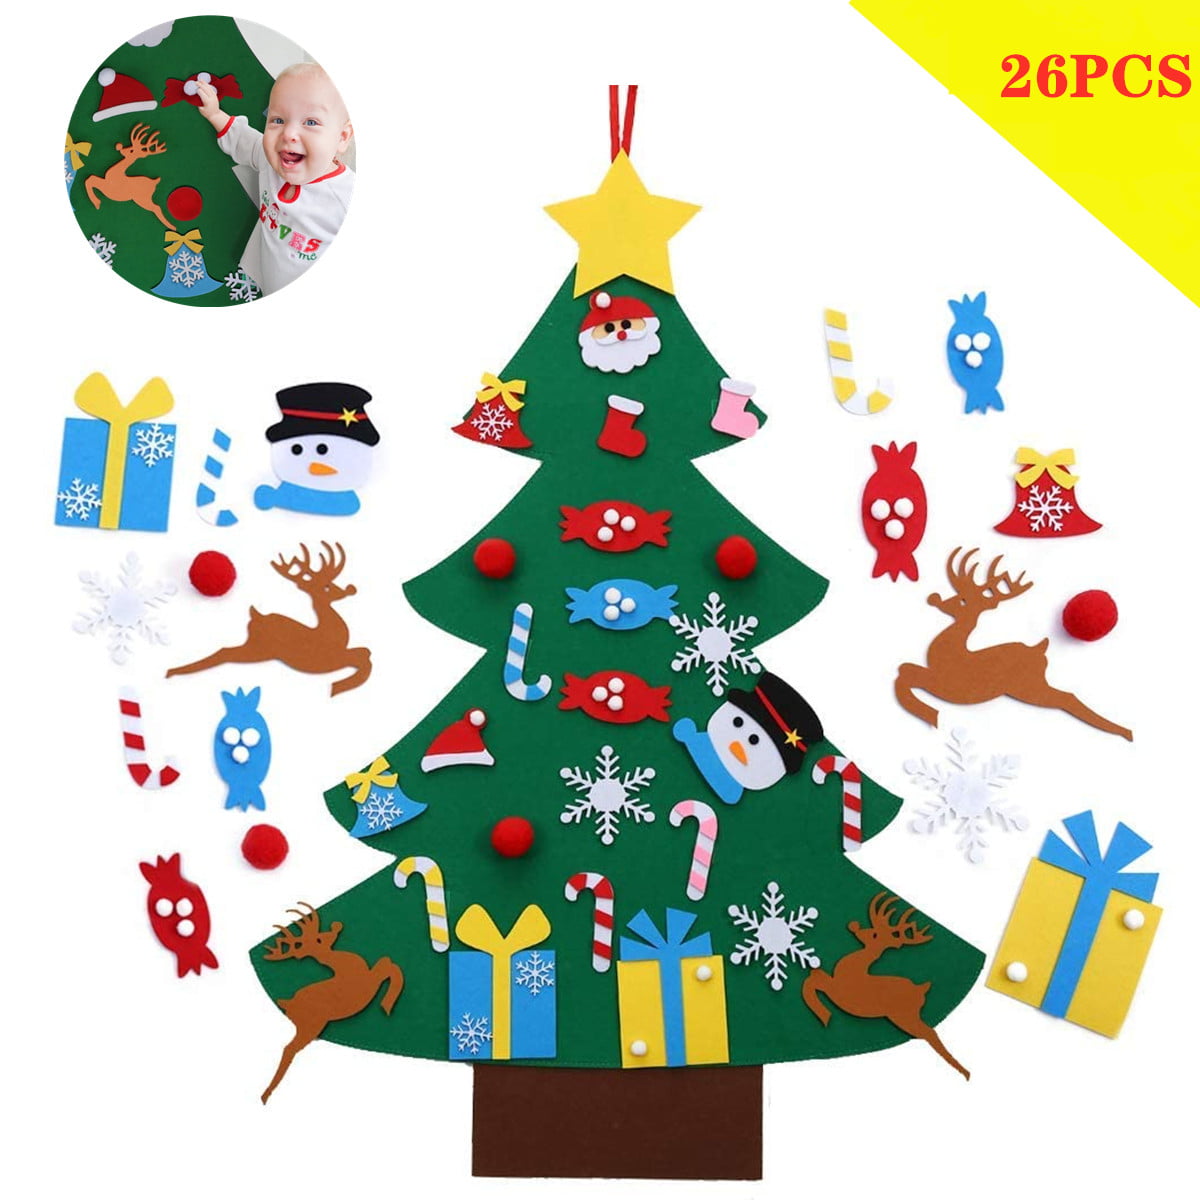 DIY Felt Christmas Tree Set w/ Ornaments for Kids Xmas Gifts New Year Wall Decor 